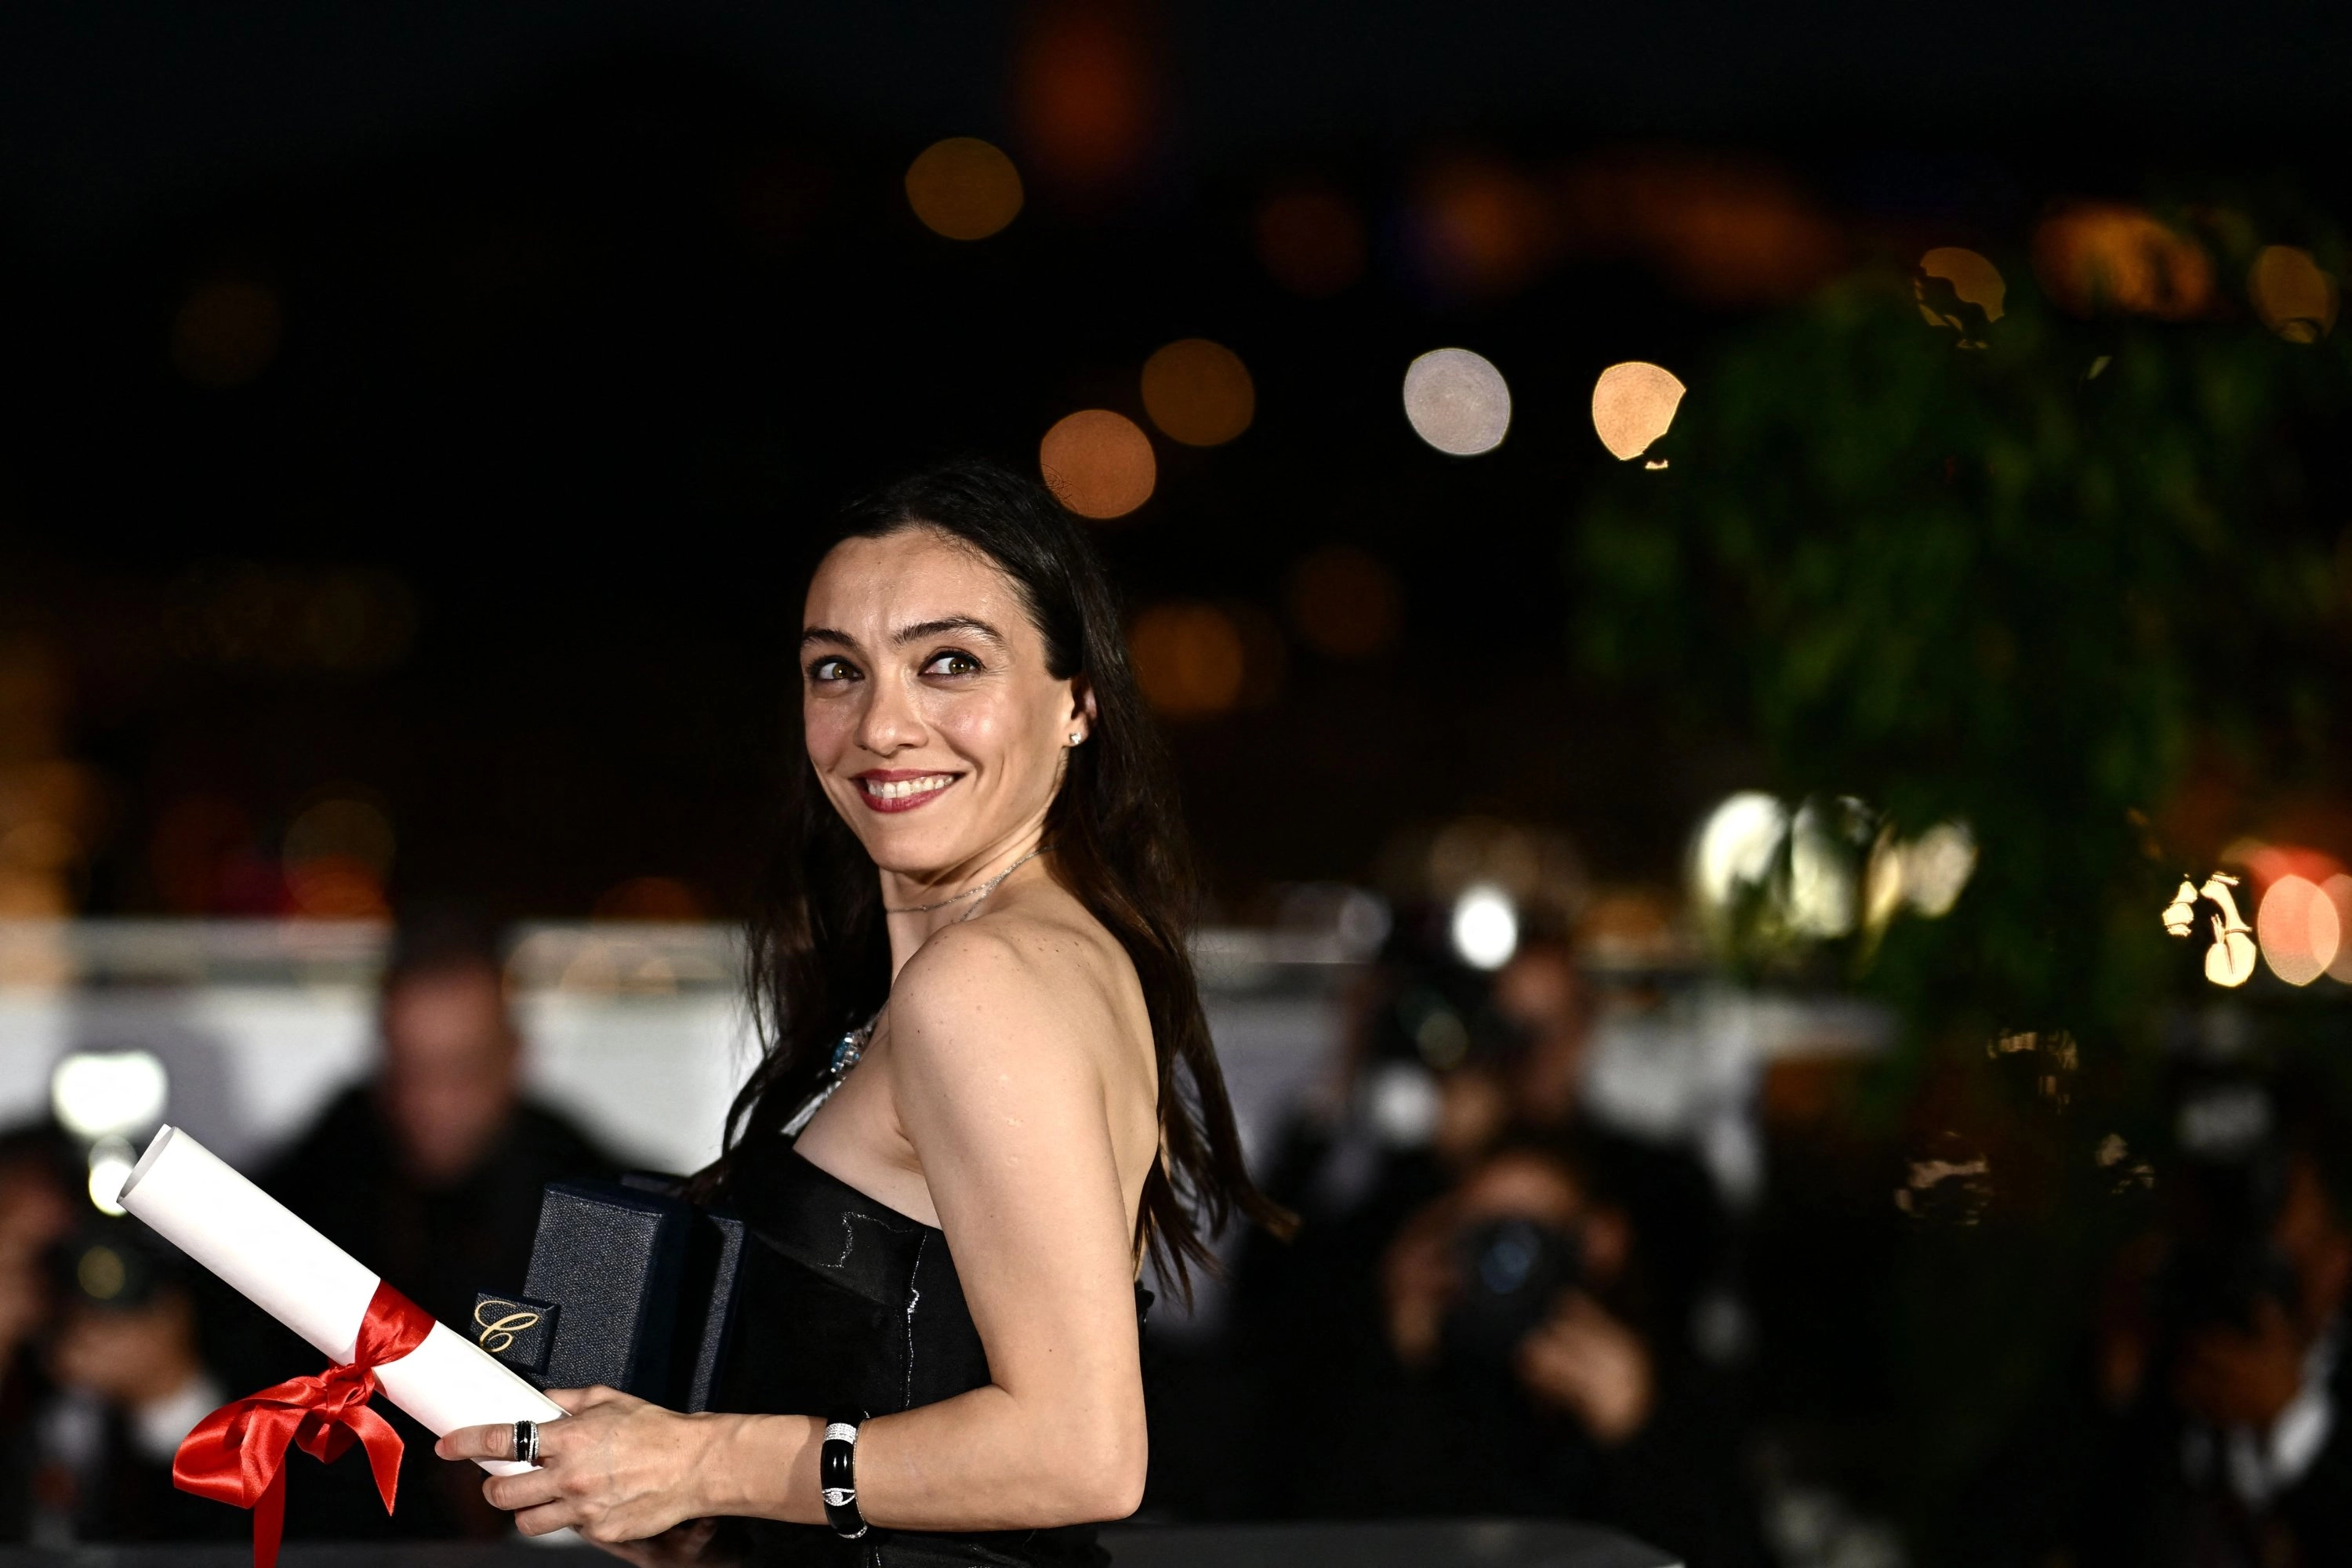 Turkish filmmaker recognized for her work